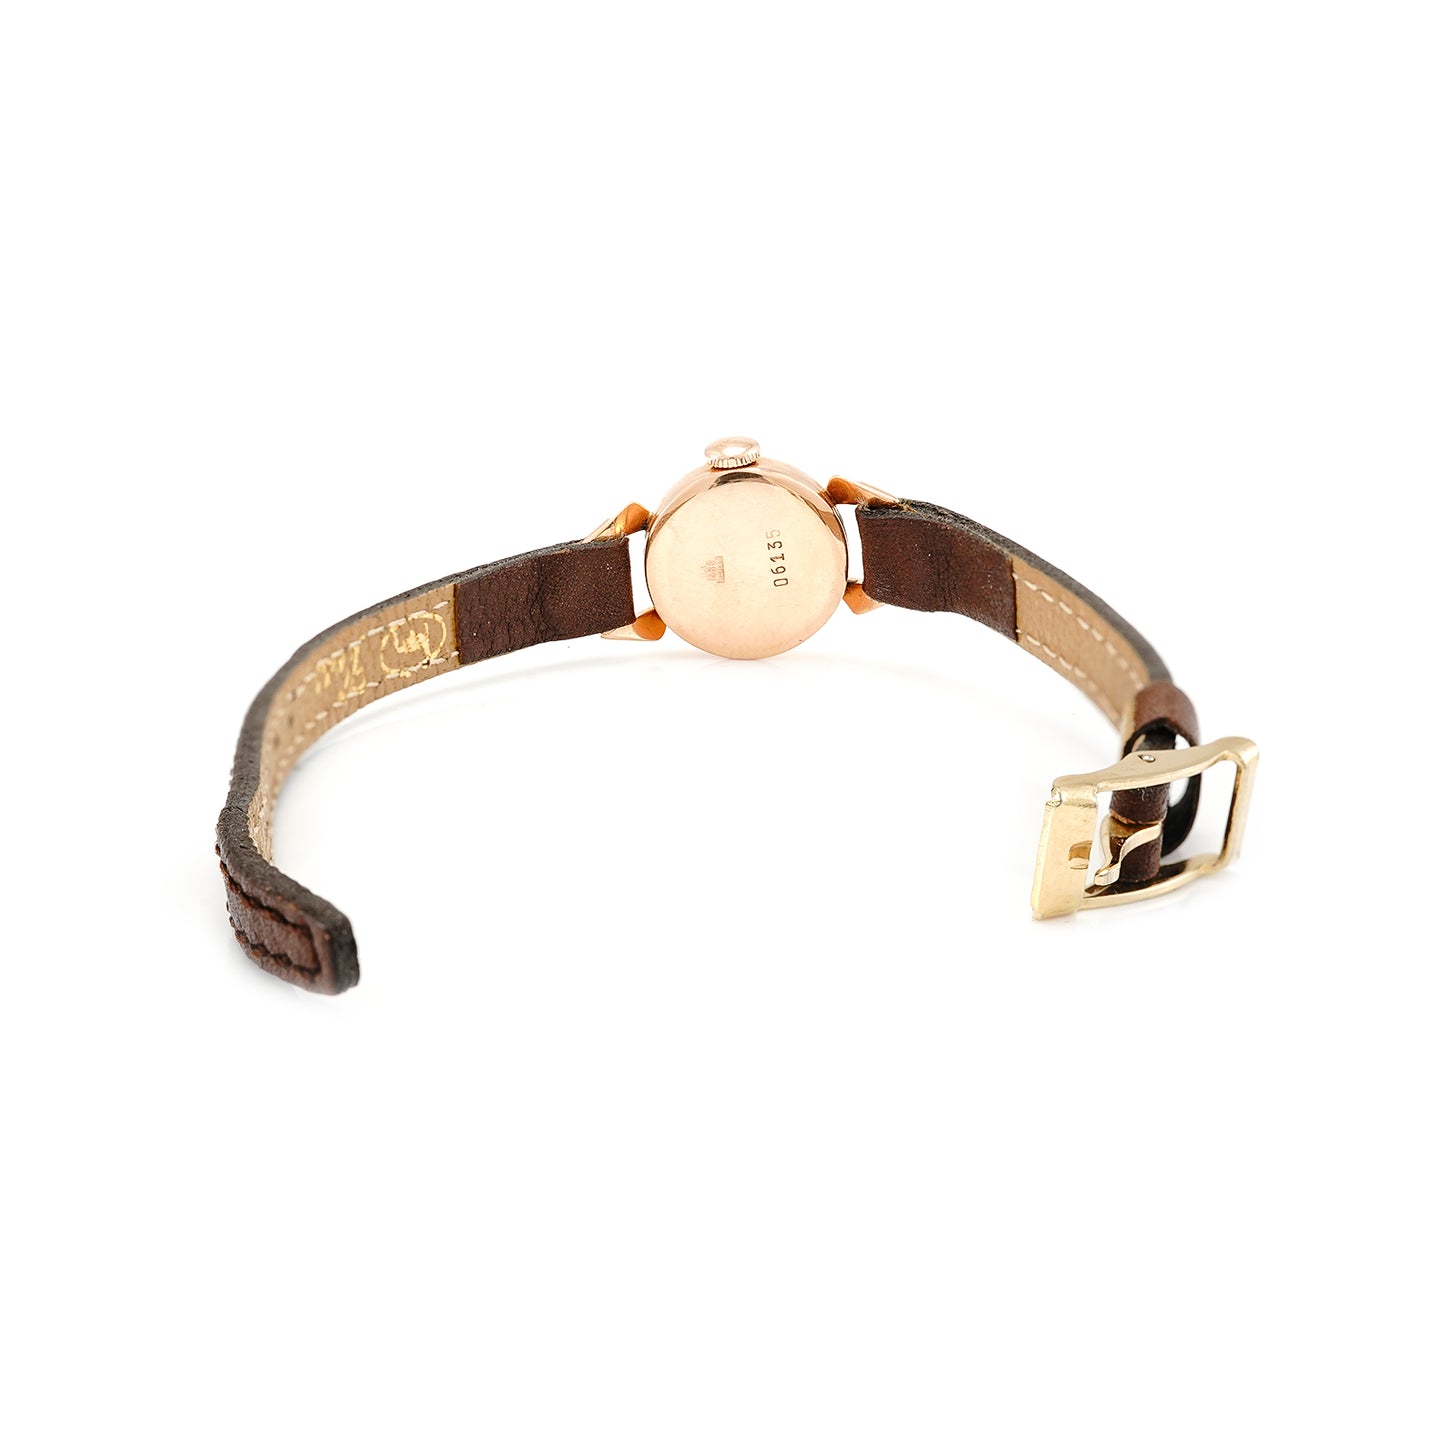 Vintage wristwatch windup watch Chaika 583 14K rose gold red gold women's watch leather strap